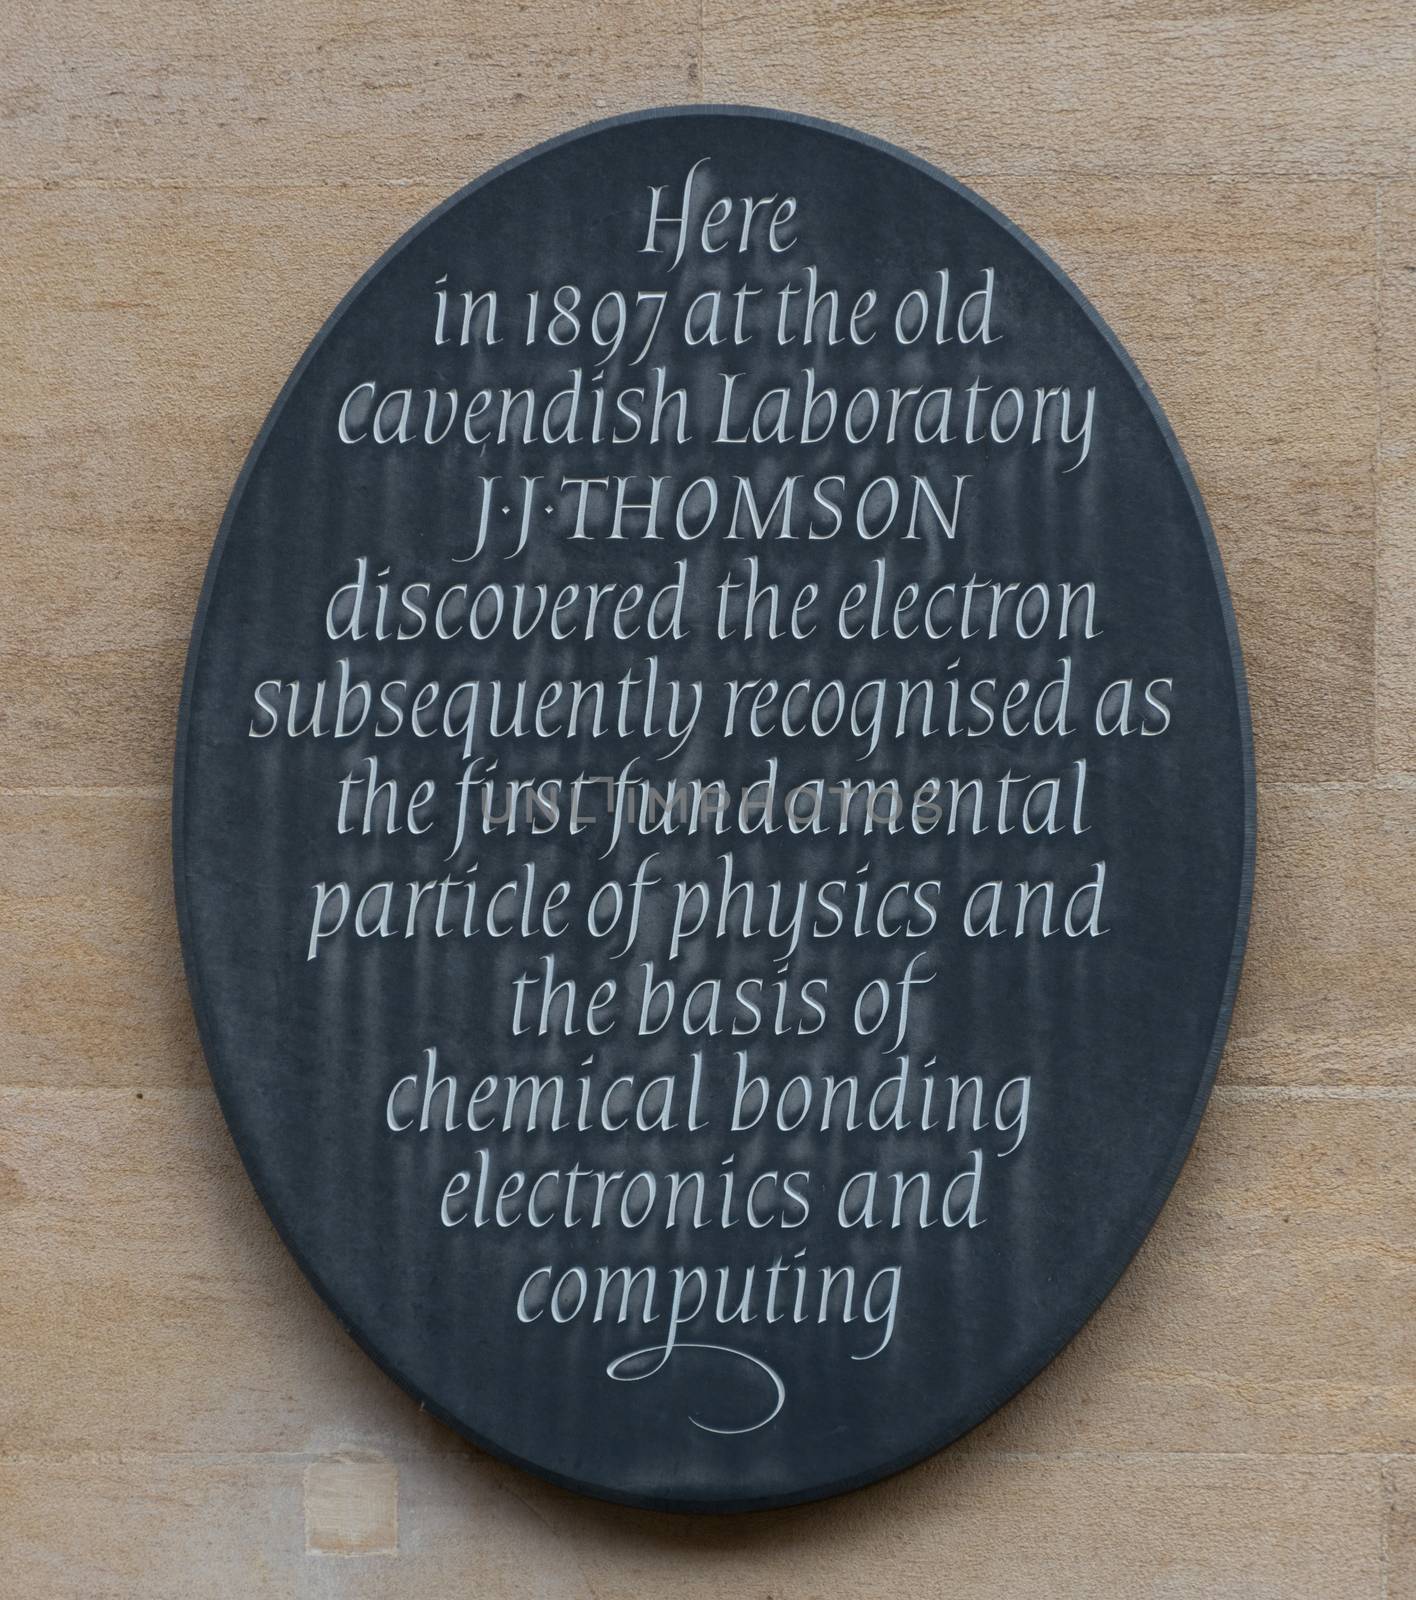 J J Thomson Plaque at Cavendish Laboratory, Cambridge